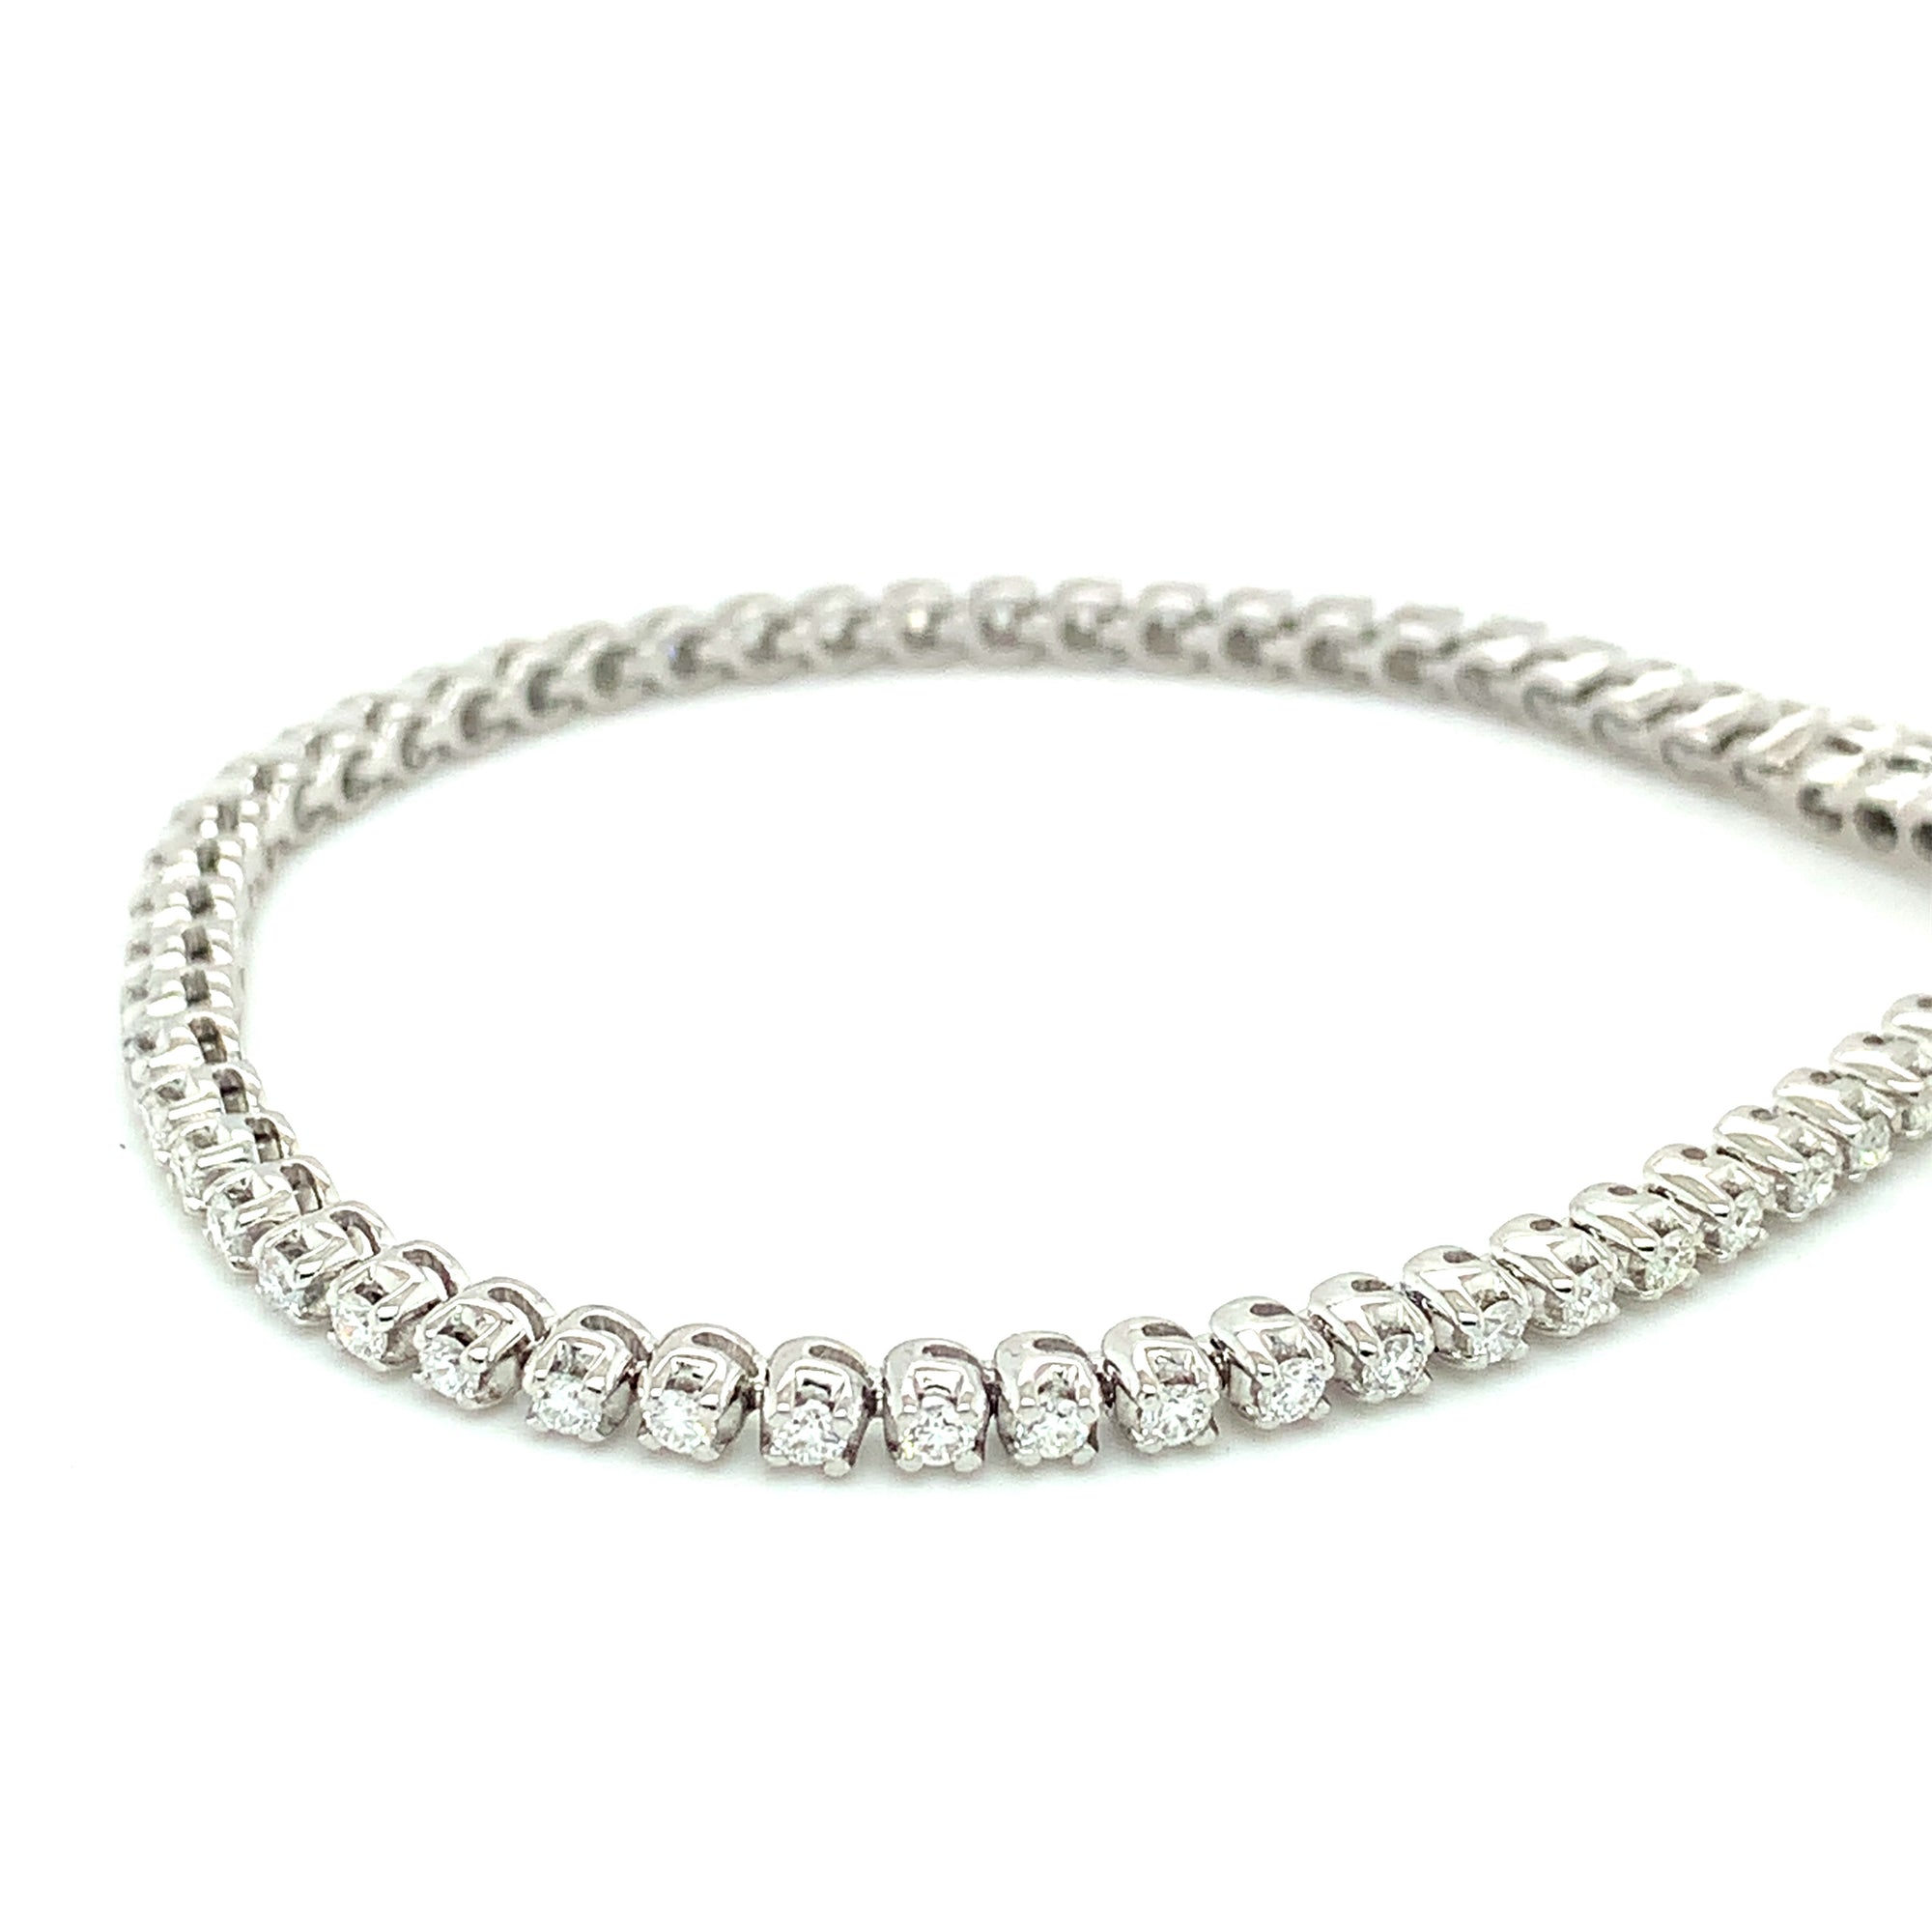 2.01ct round brilliant cut diamond tennis bracelet, 18kt white gold, G/H colour, SI clarity